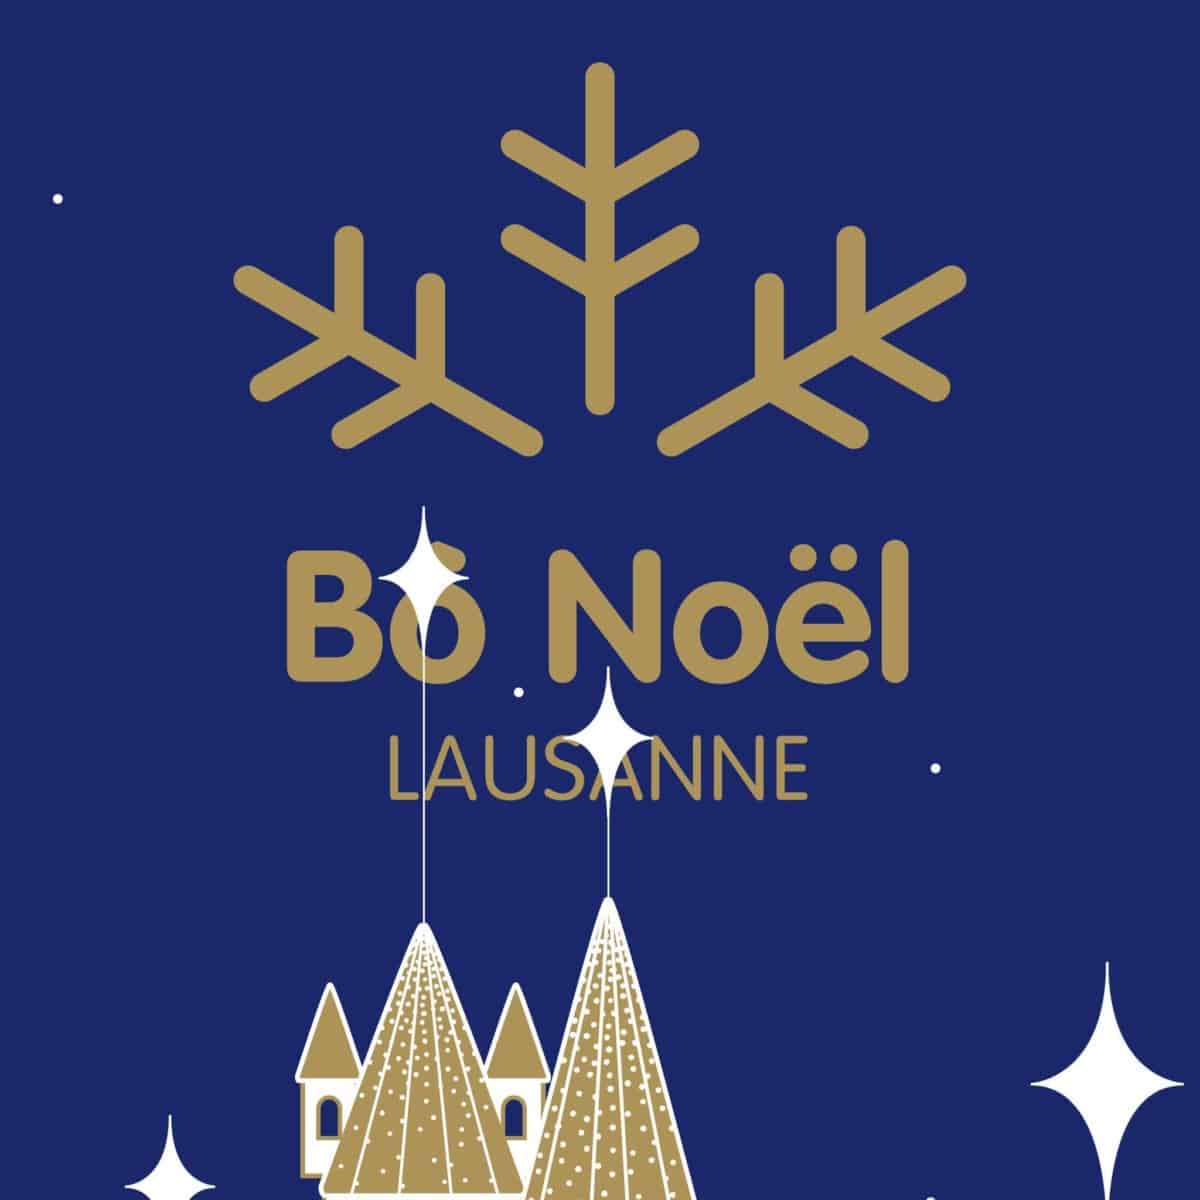 Marché de Noël Lausanne Bô Noël programme